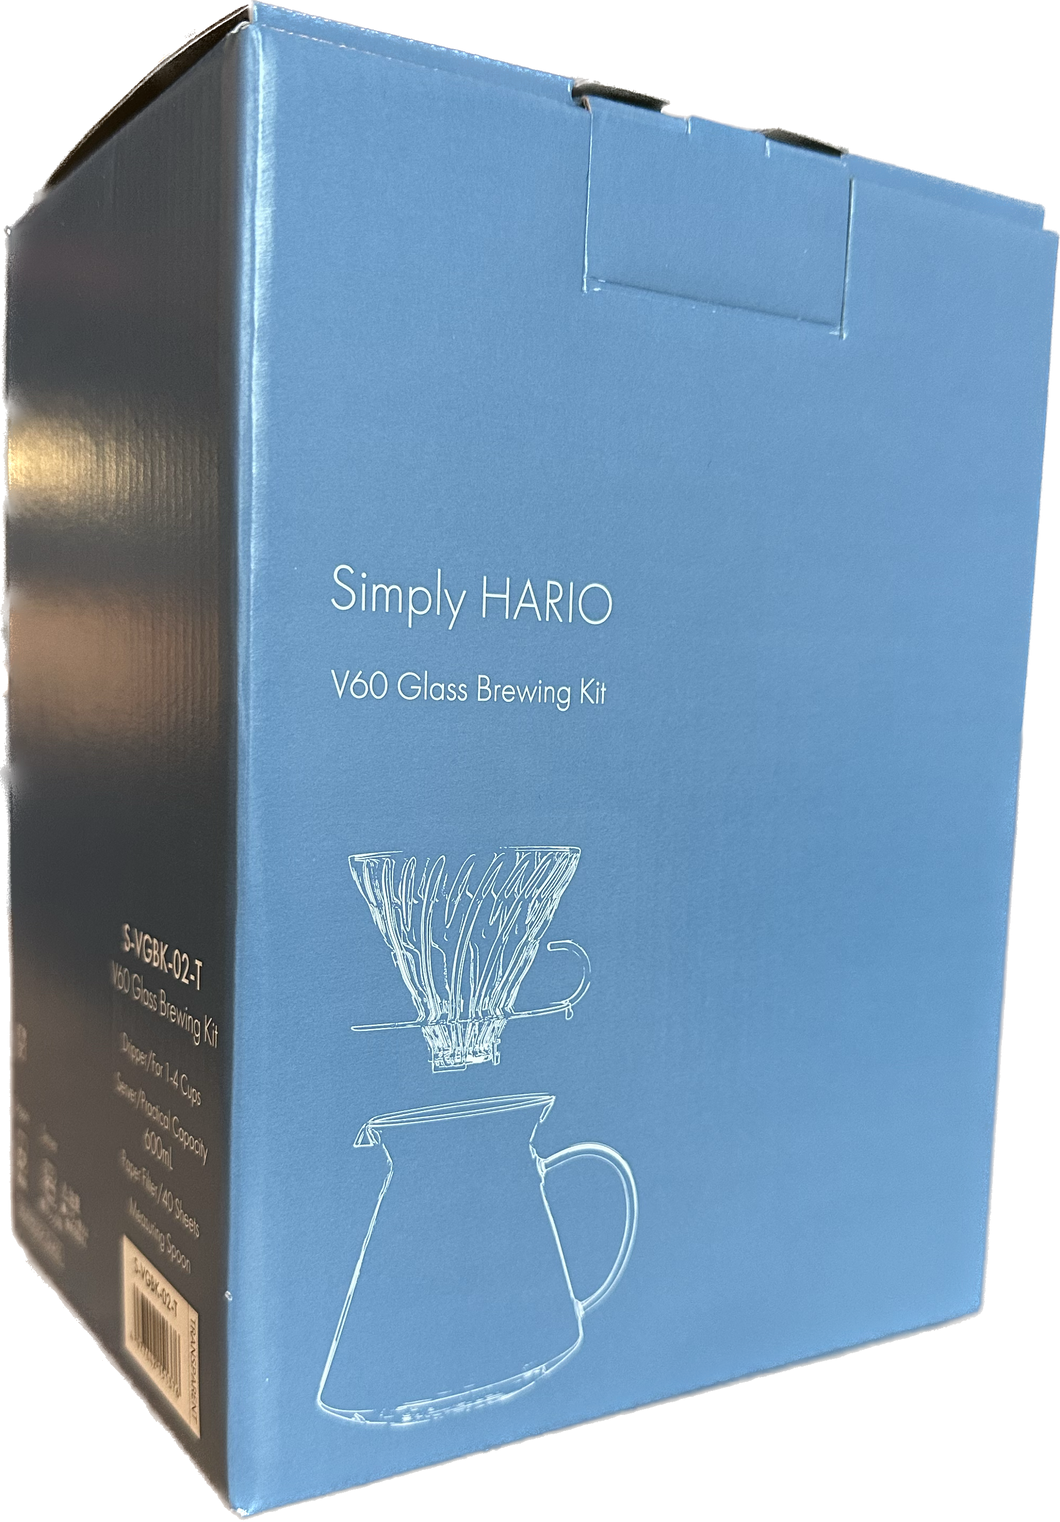 Simply HARIO V60 Glass Brewing Kit